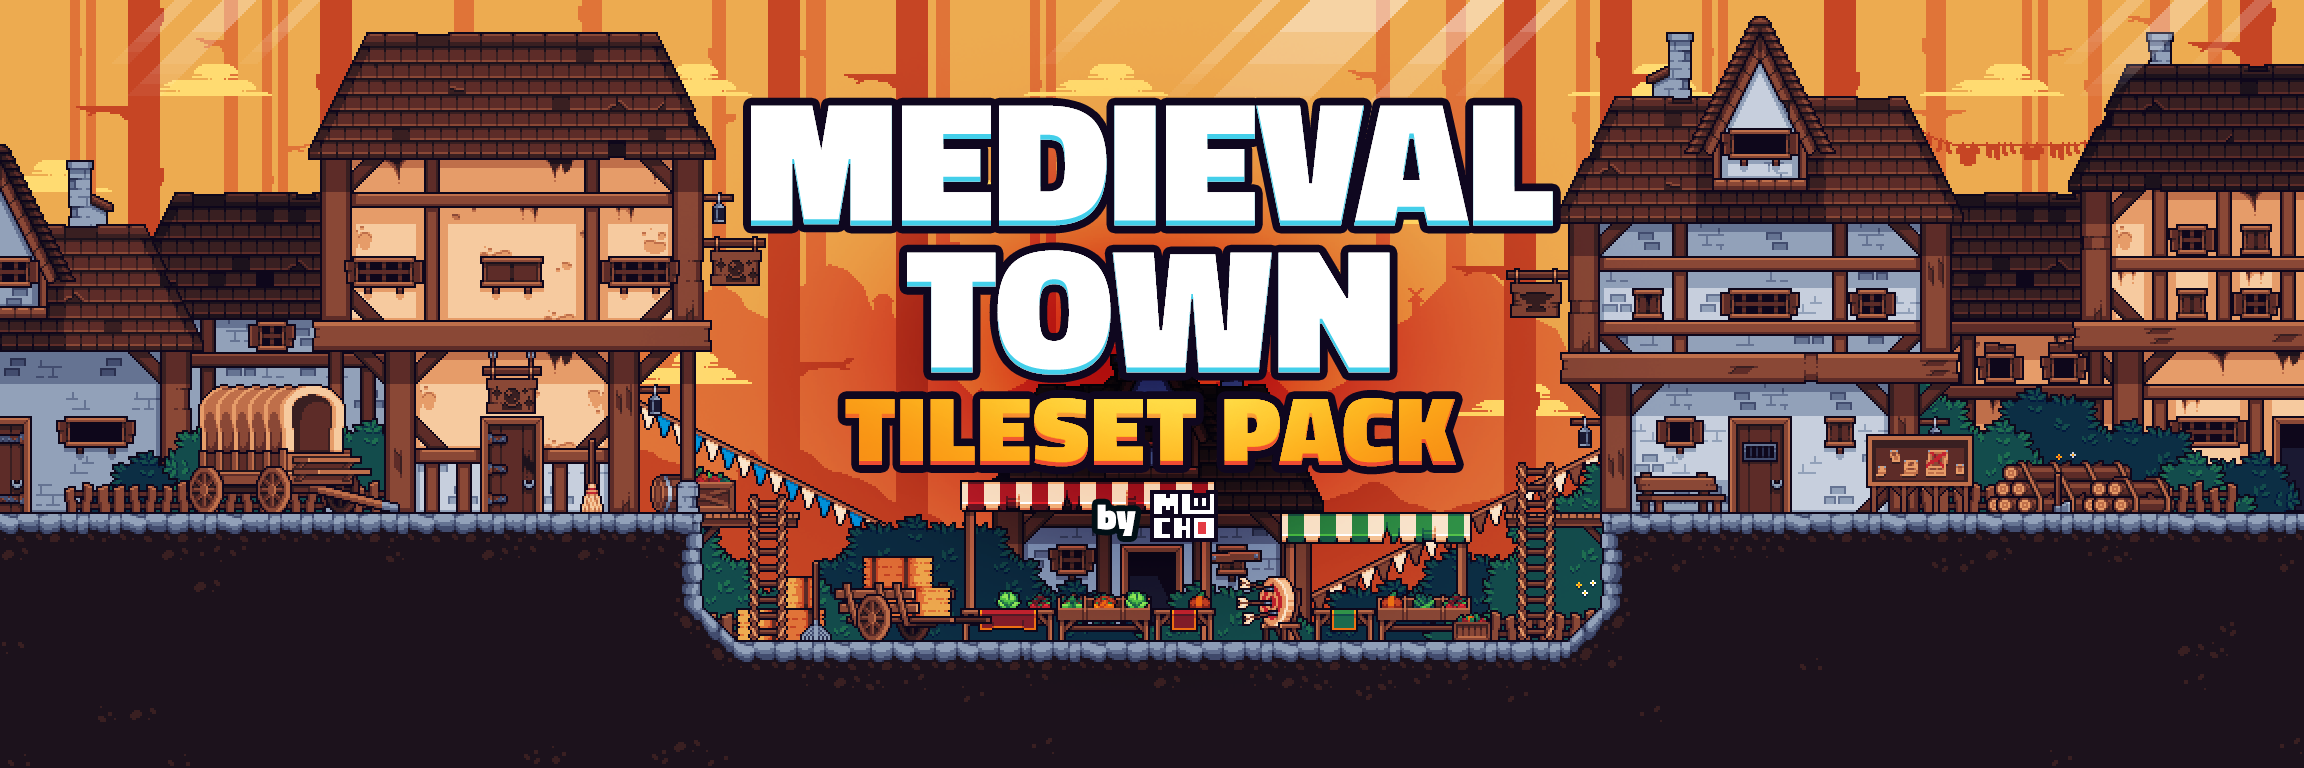 Medieval Town Tileset Pack